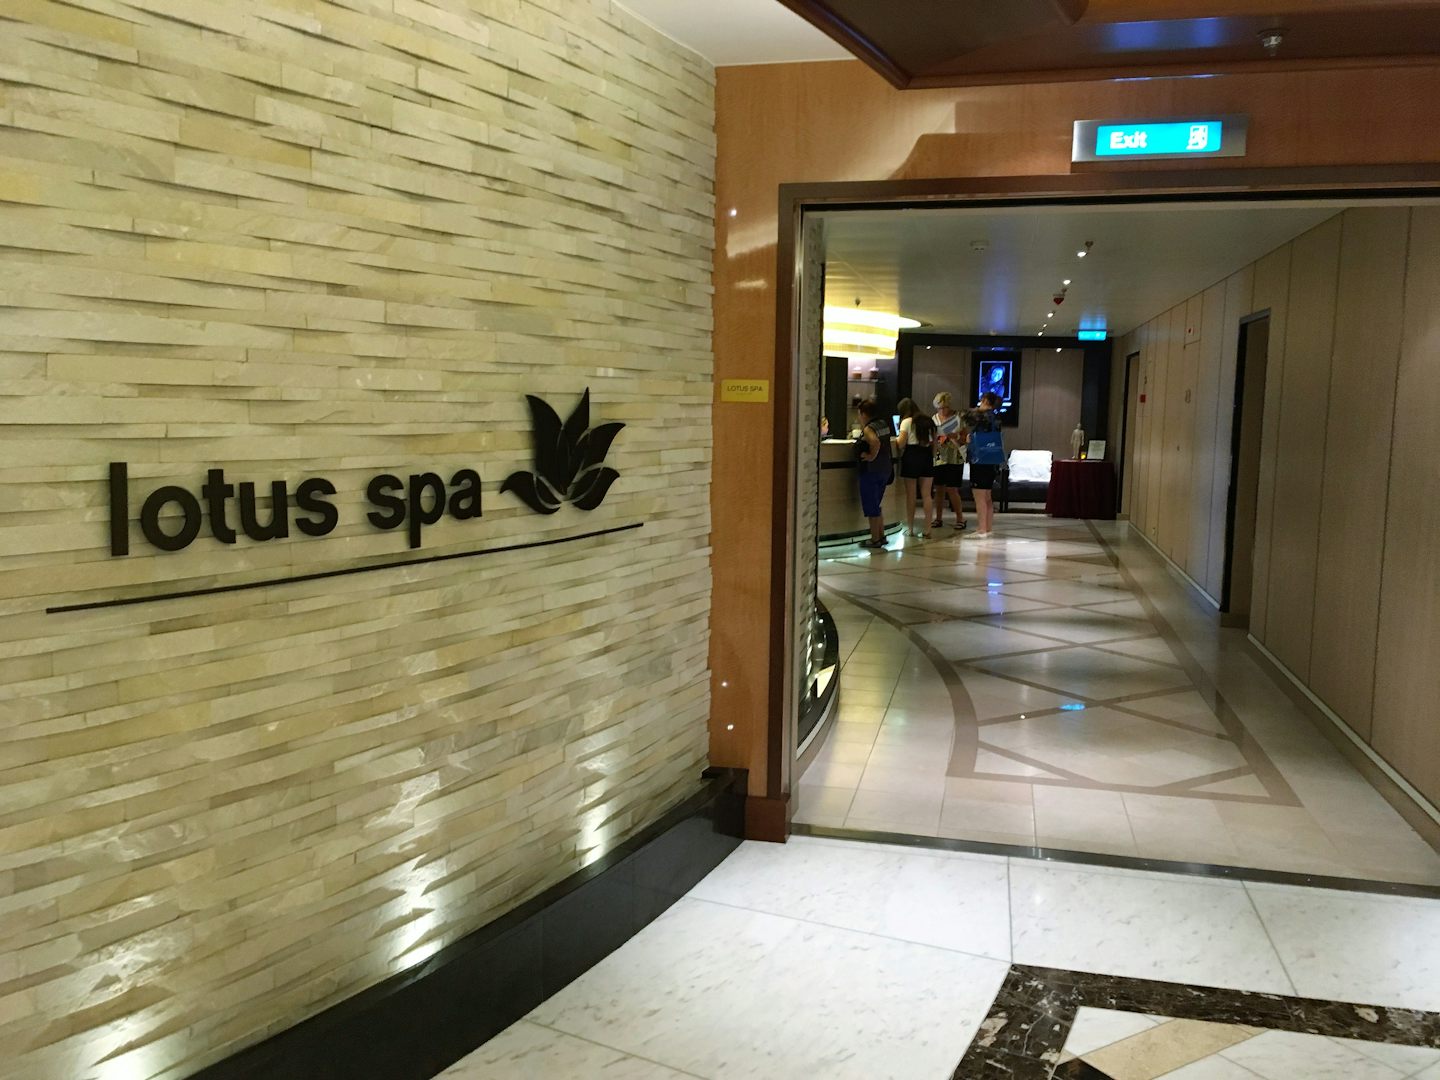 Lotus Spa Entrance - Regal Princess